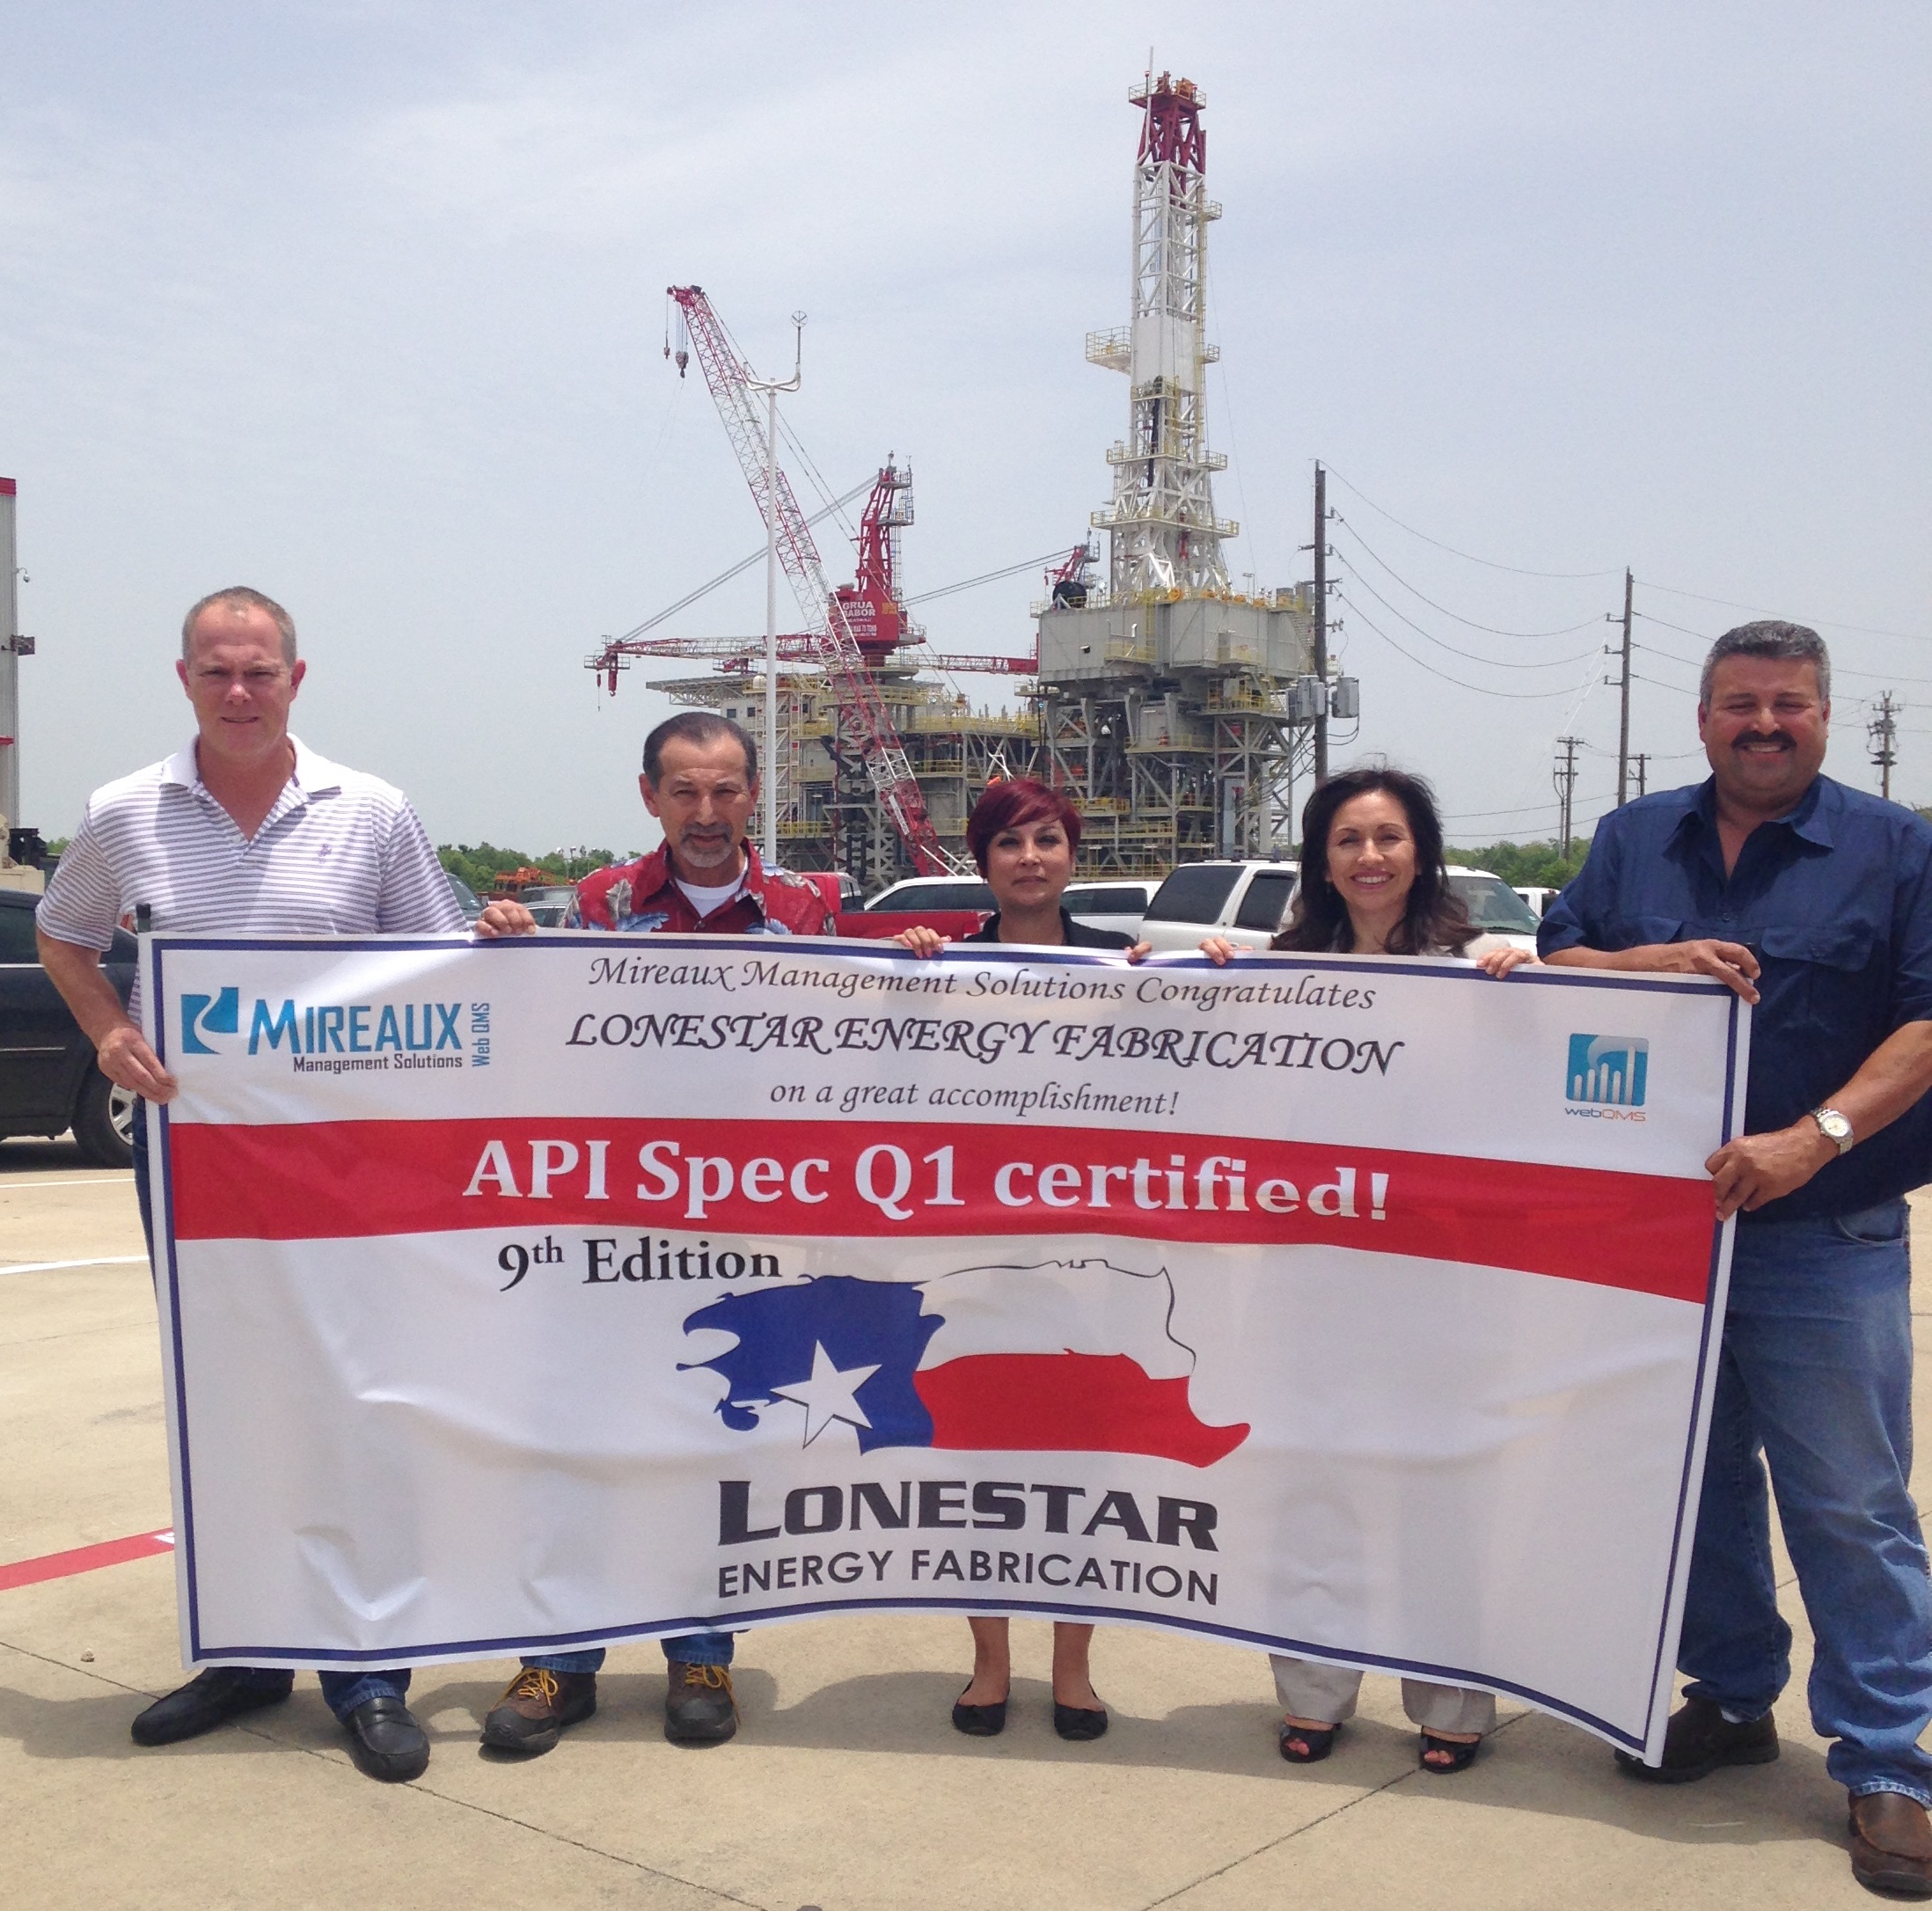 Lonestar Energy Fabrication team celebrates ISO 9001 certification